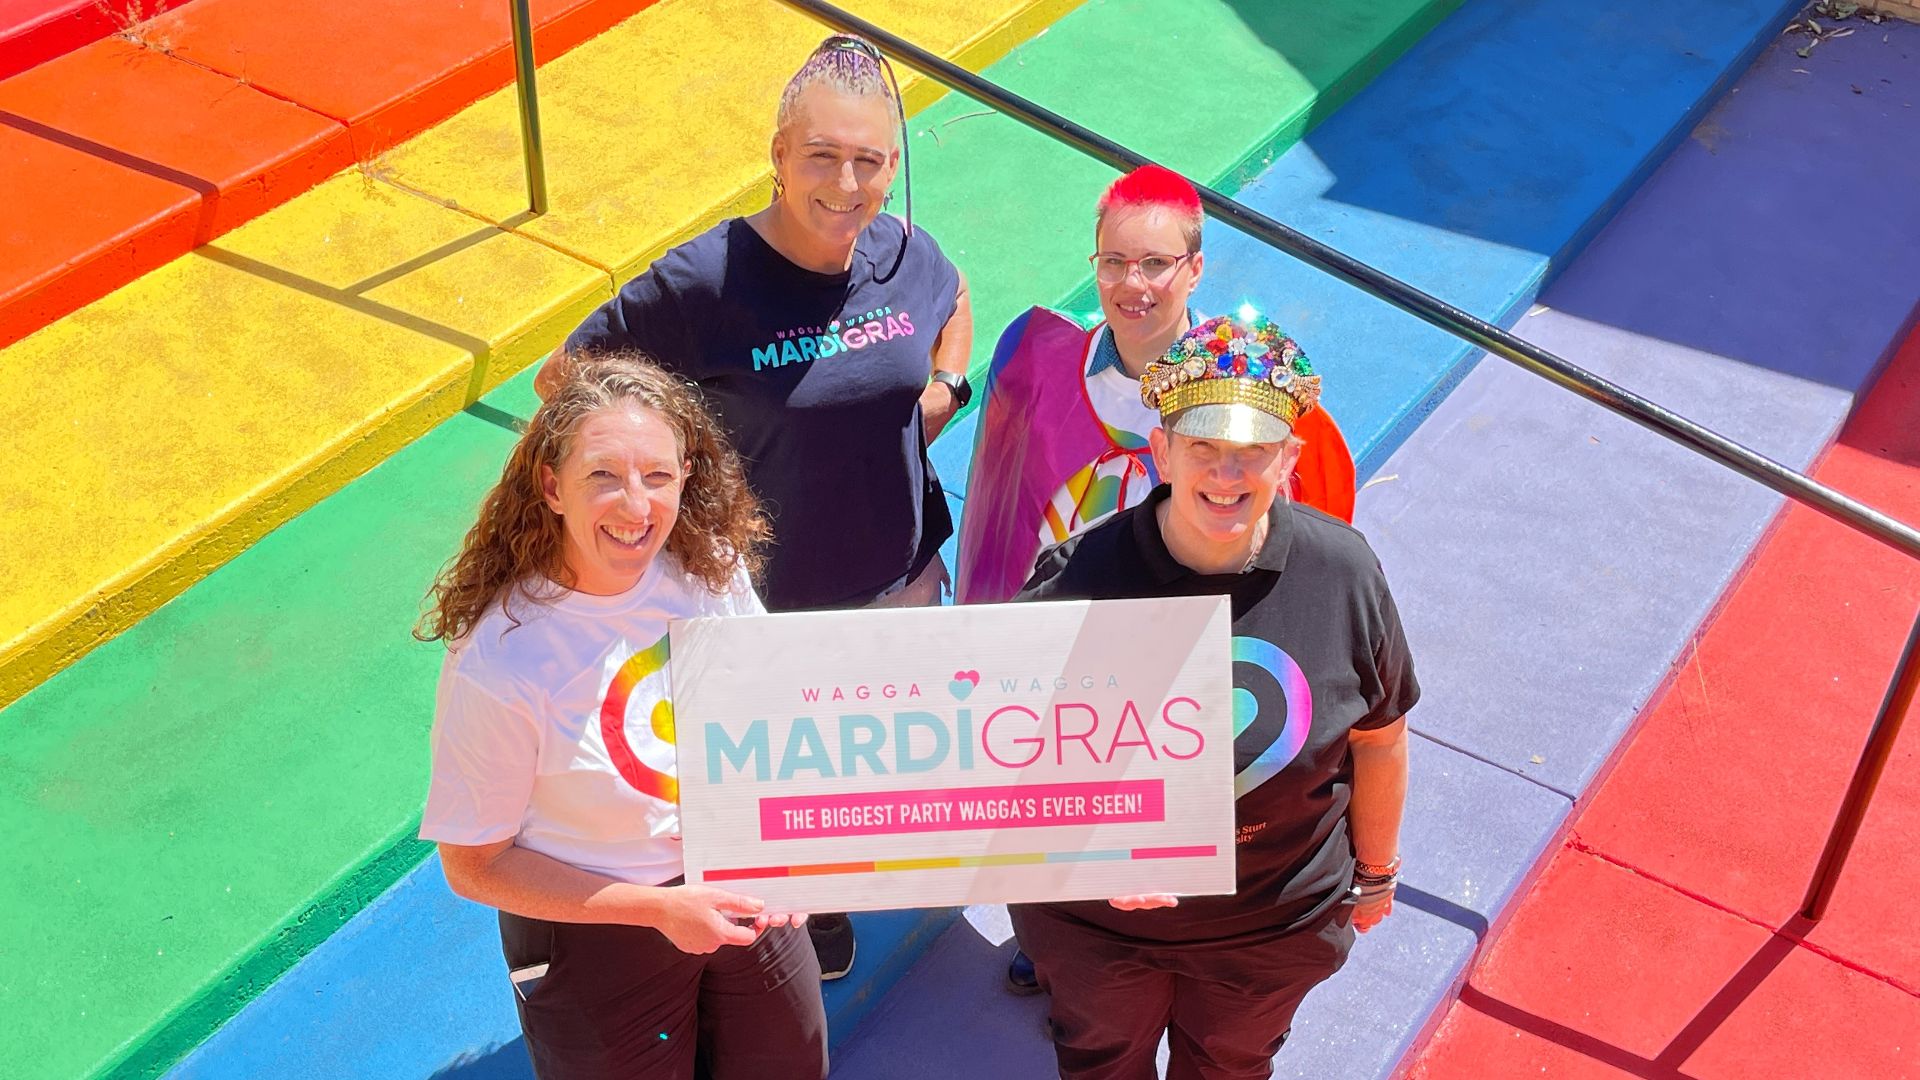 University renews major sponsorship of Wagga Wagga Mardi Gras